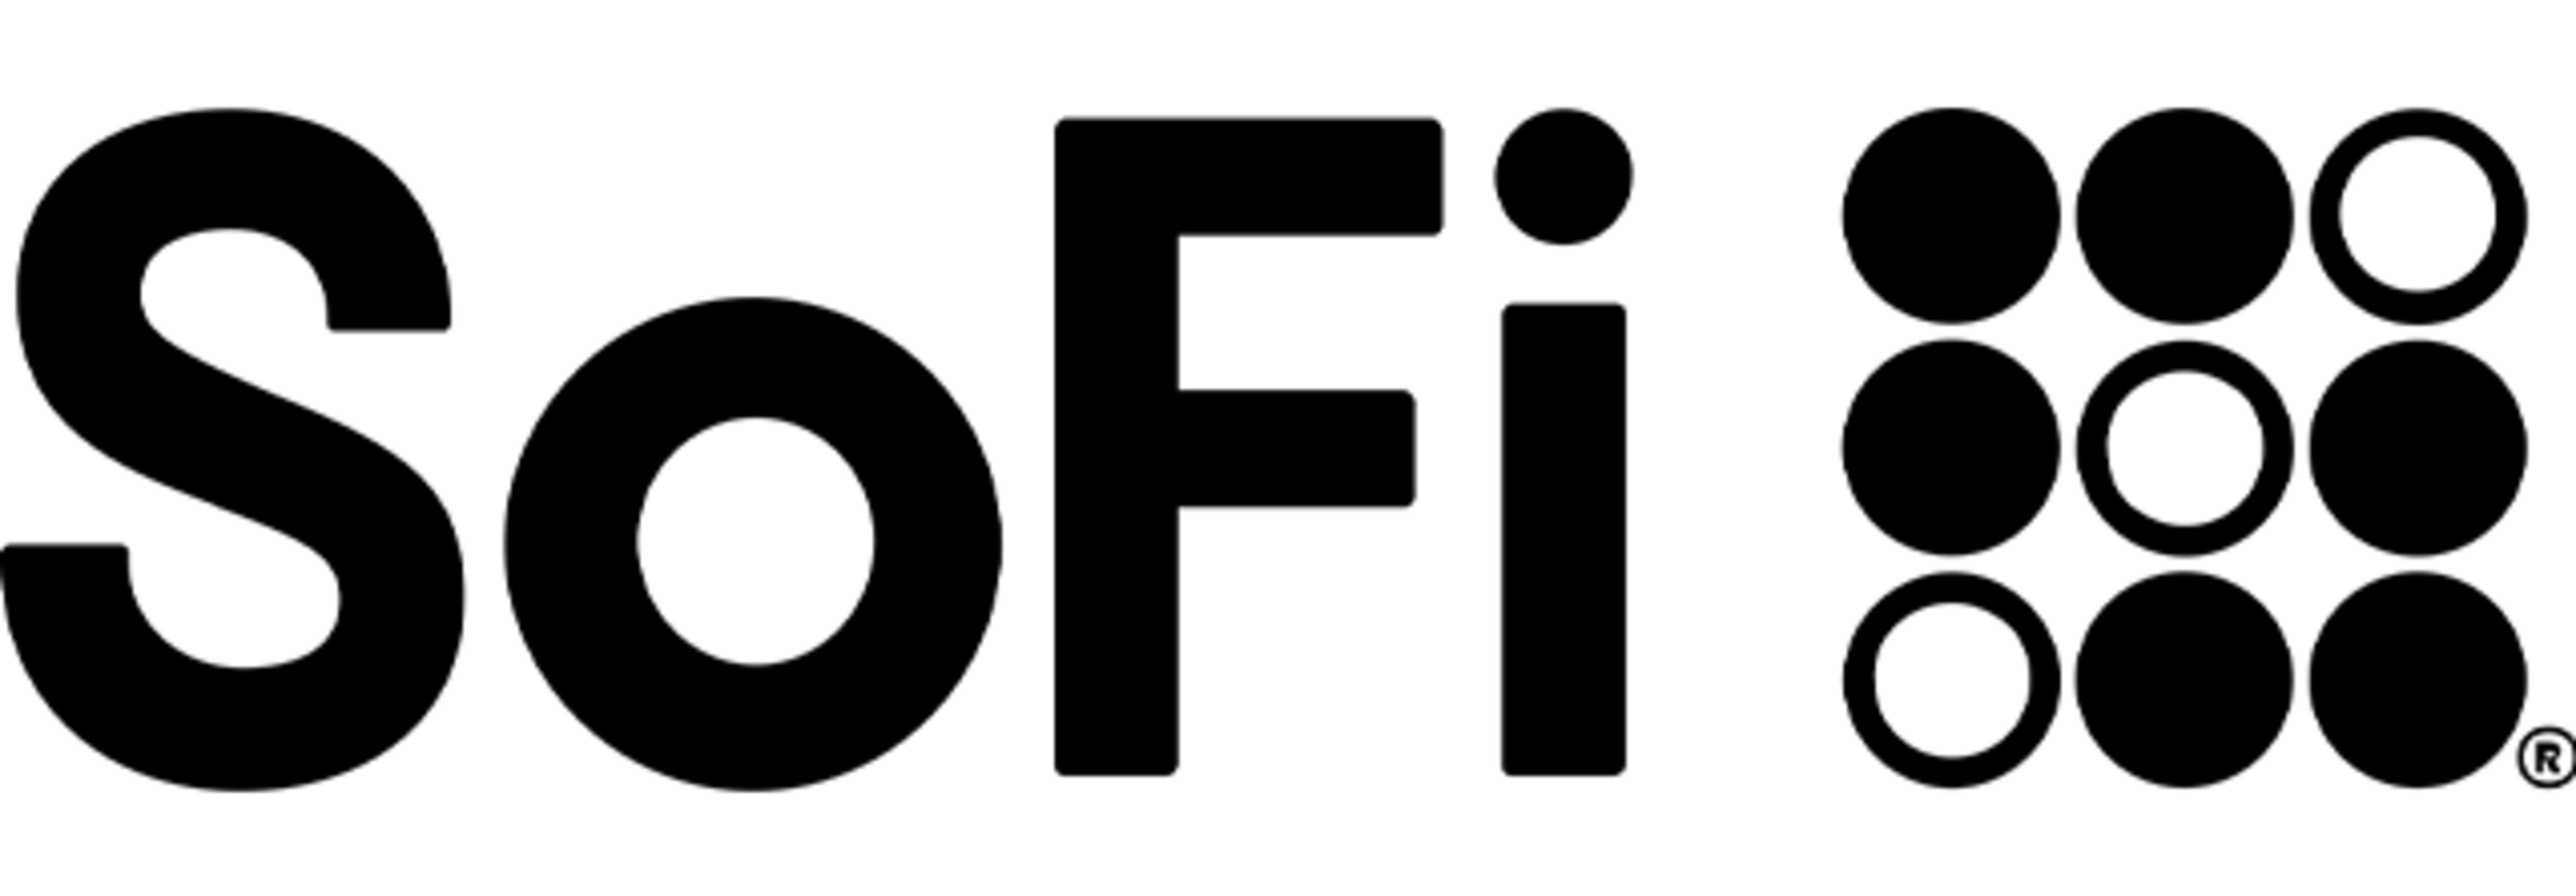 SoFi logo in black on a transparent background